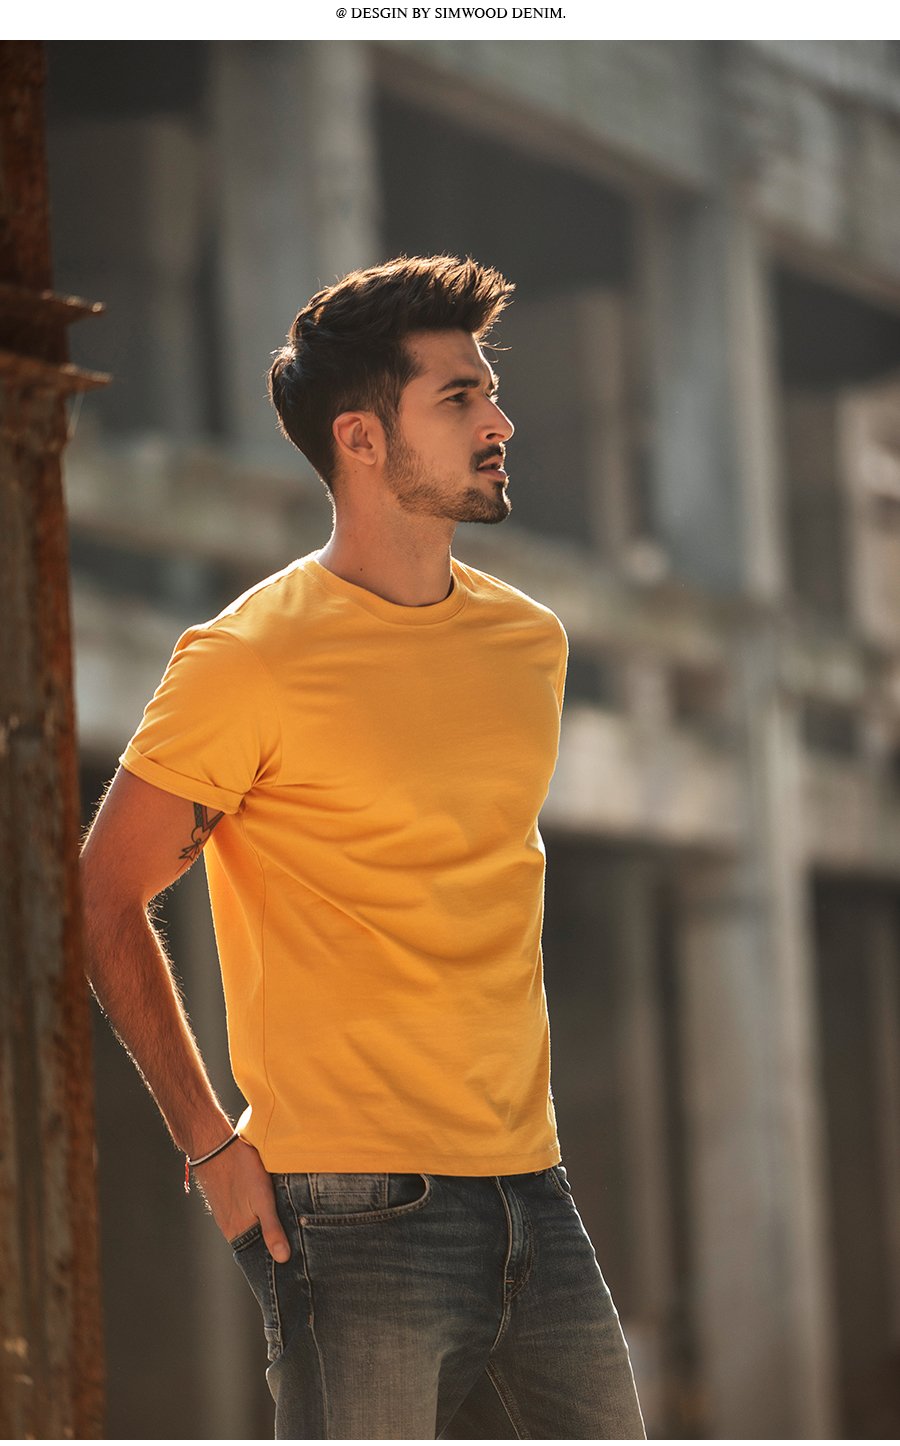 T-Shirt Men 100% Cotton Solid Color Basics O-neck.